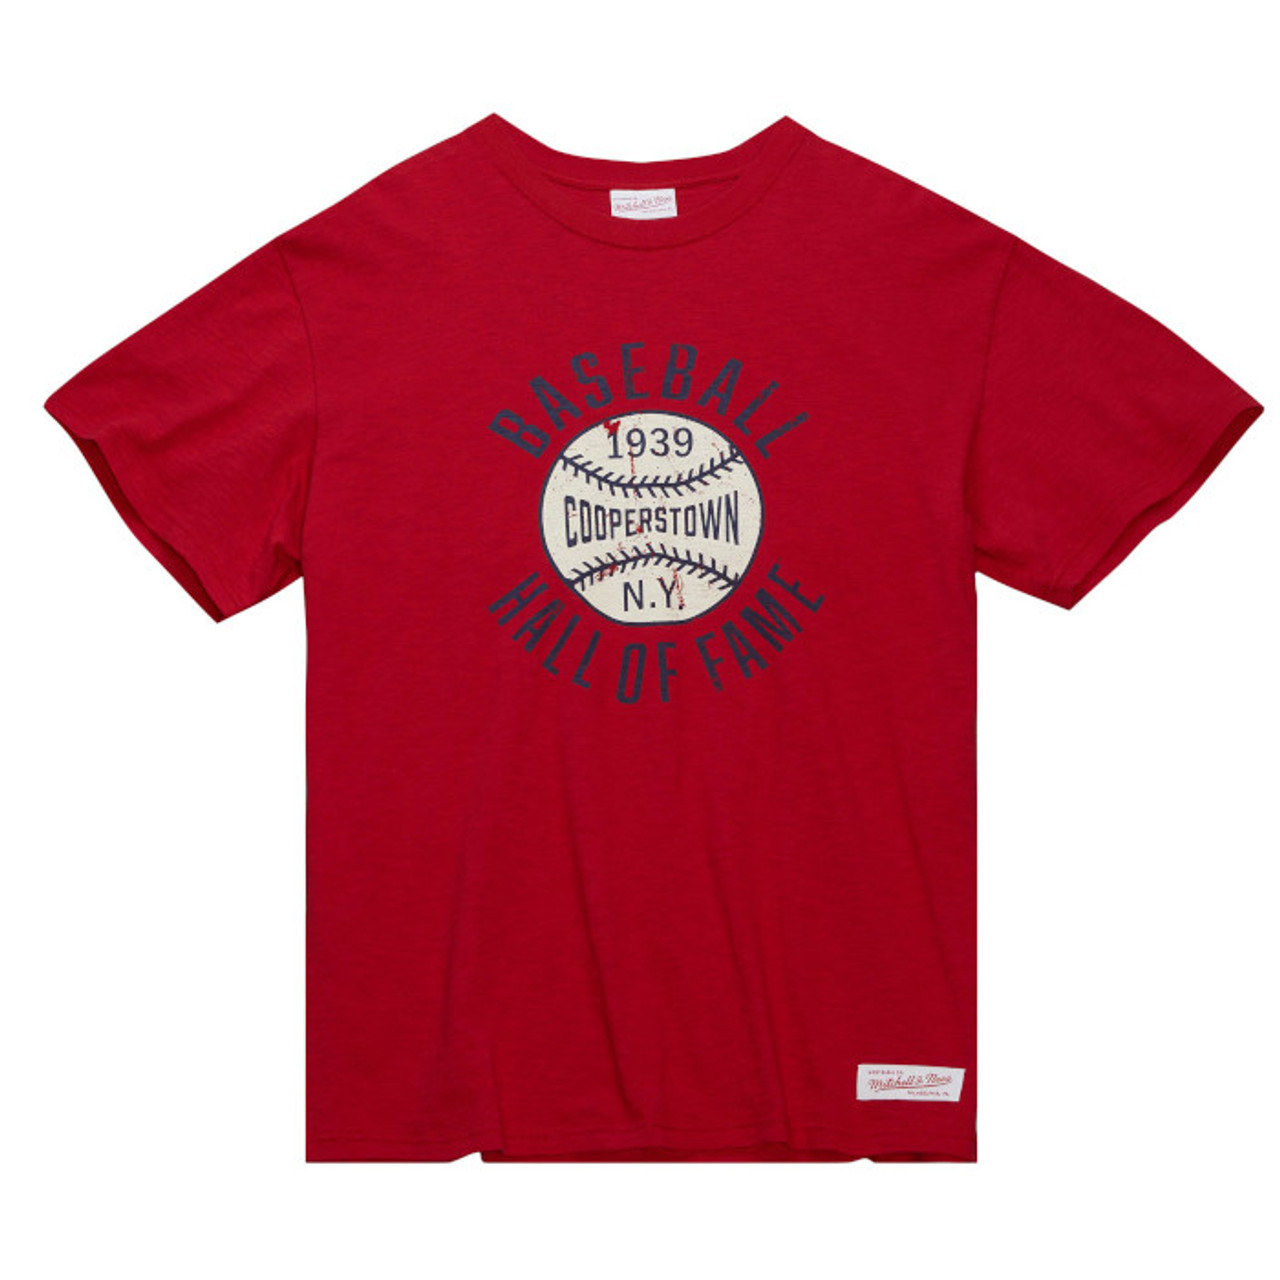 Men’s Mitchell & Ness St. Louis Cardinals Legend Slub Henley Red and Navy  Baseball Shirt